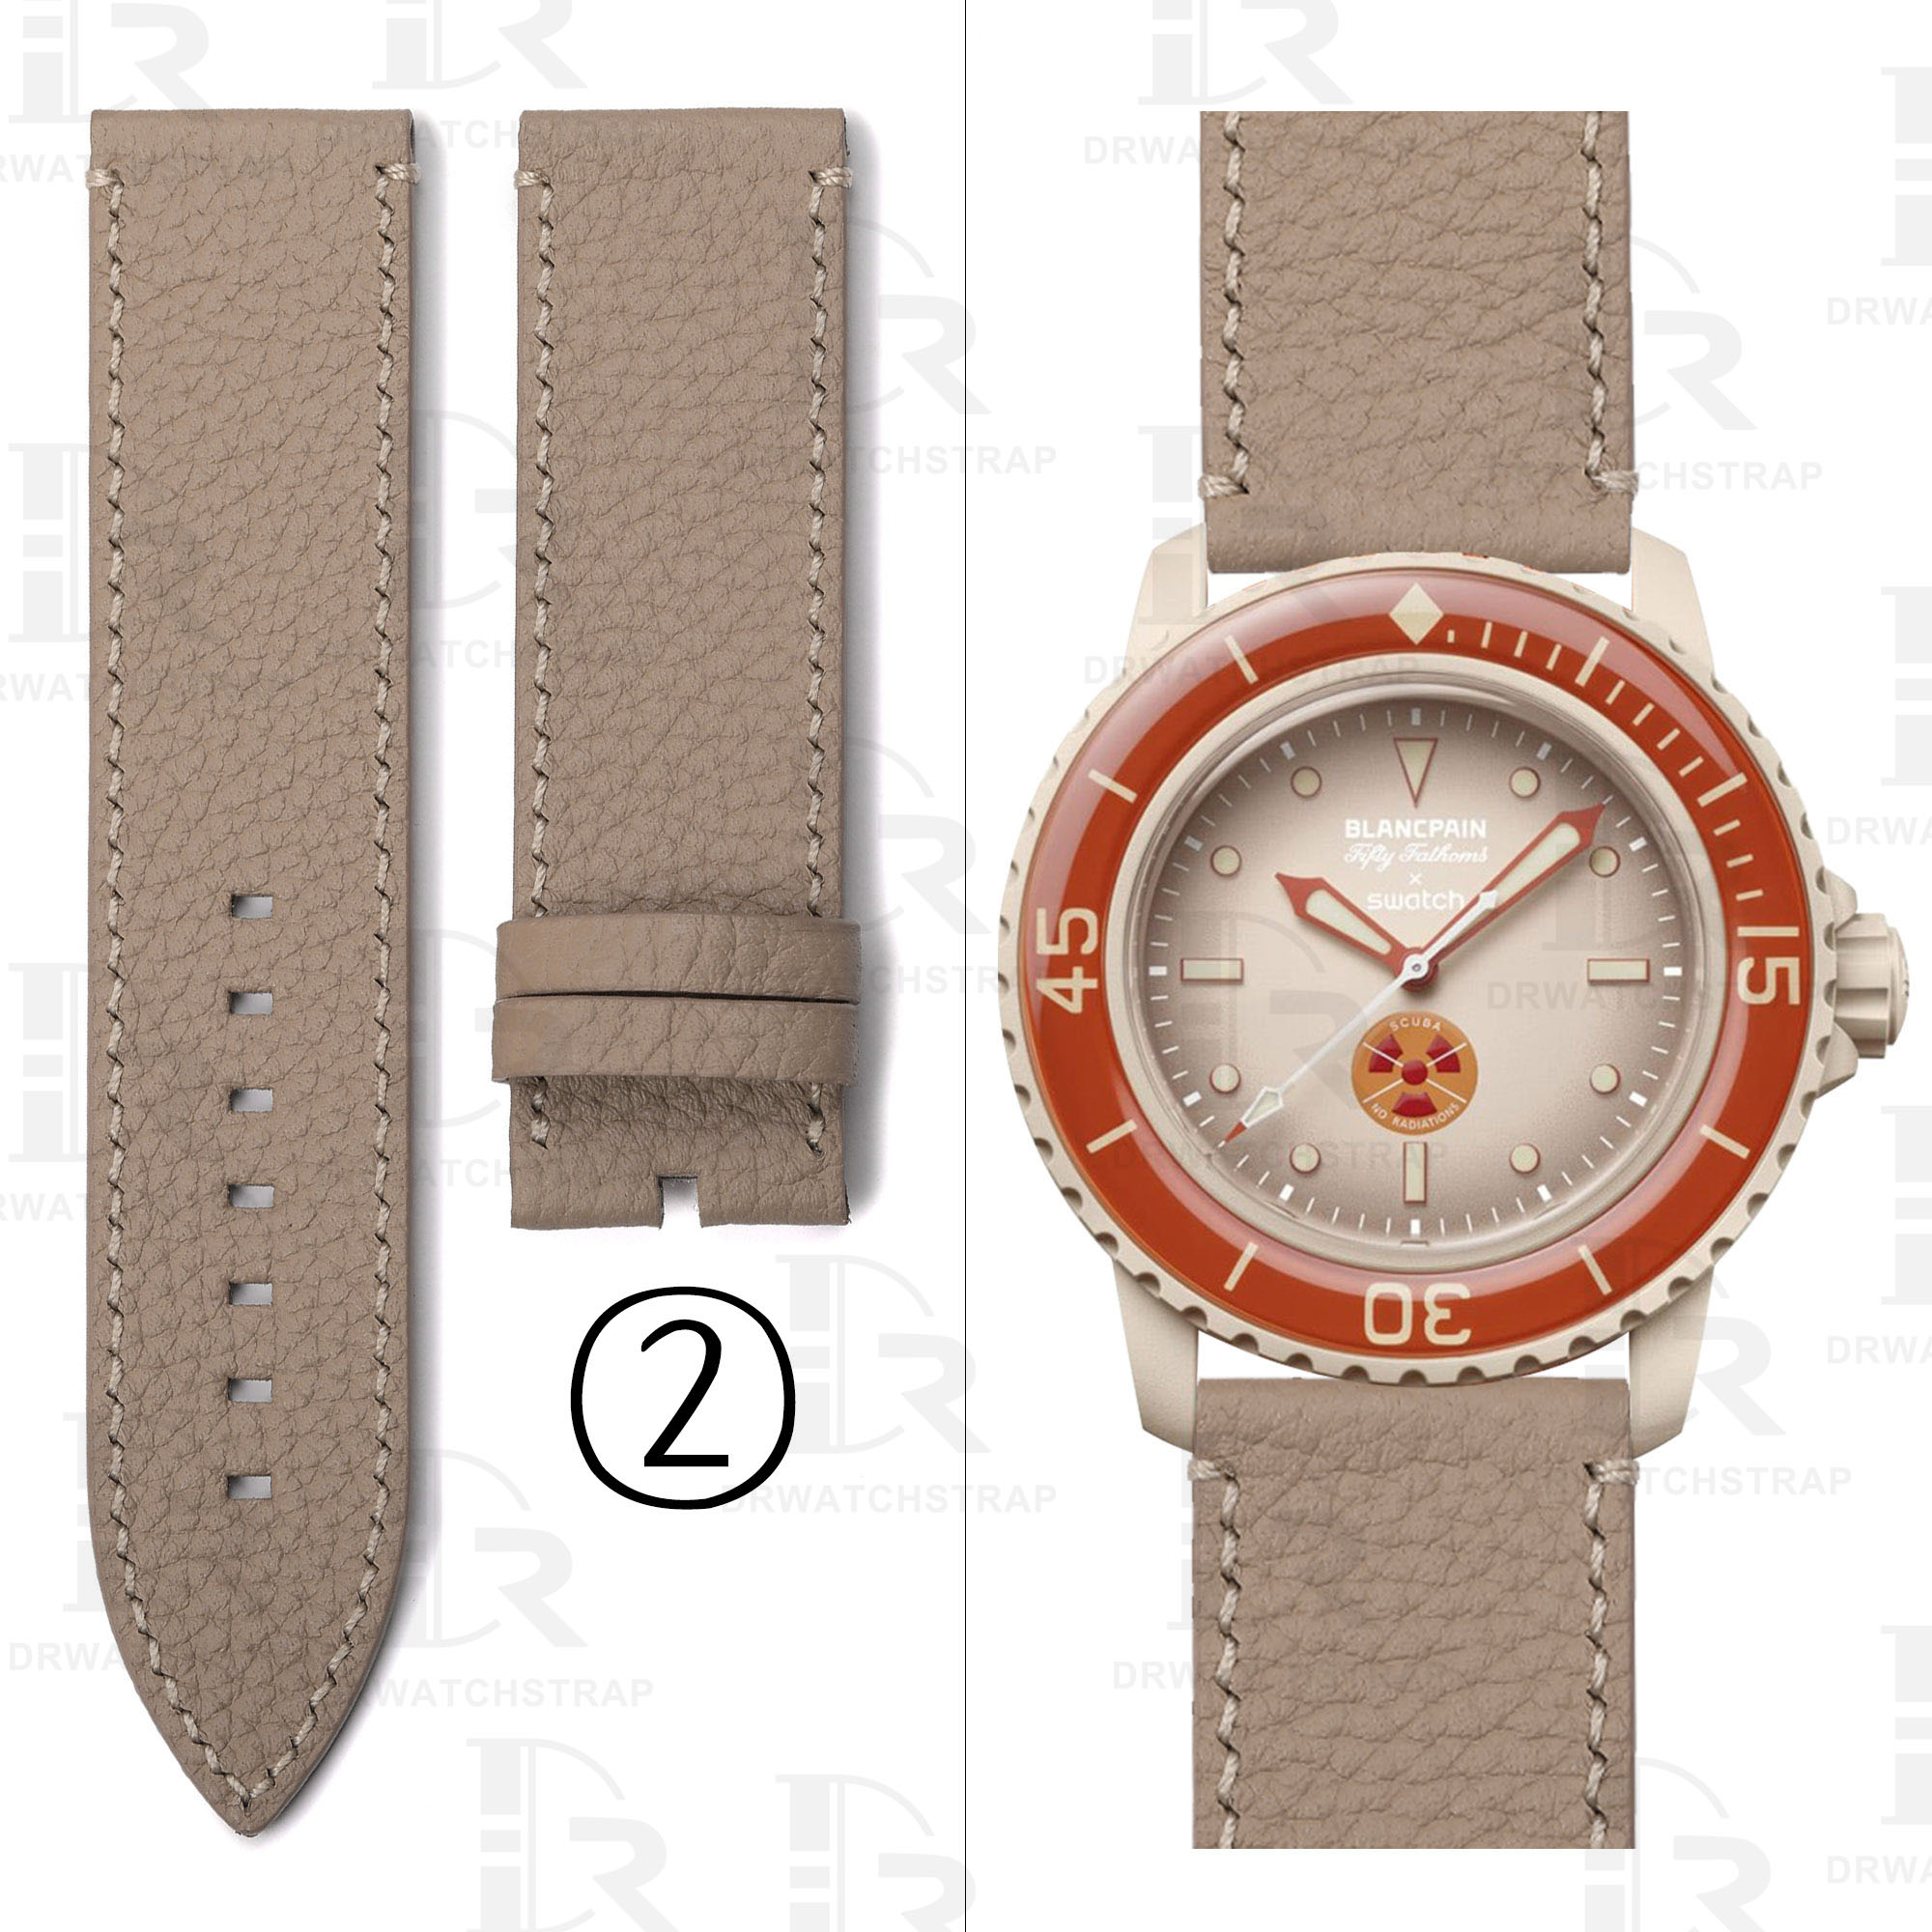 Buy Custom Blancpain x Swatch leather strap 22mm Orange Calfskin leather watch band (2)